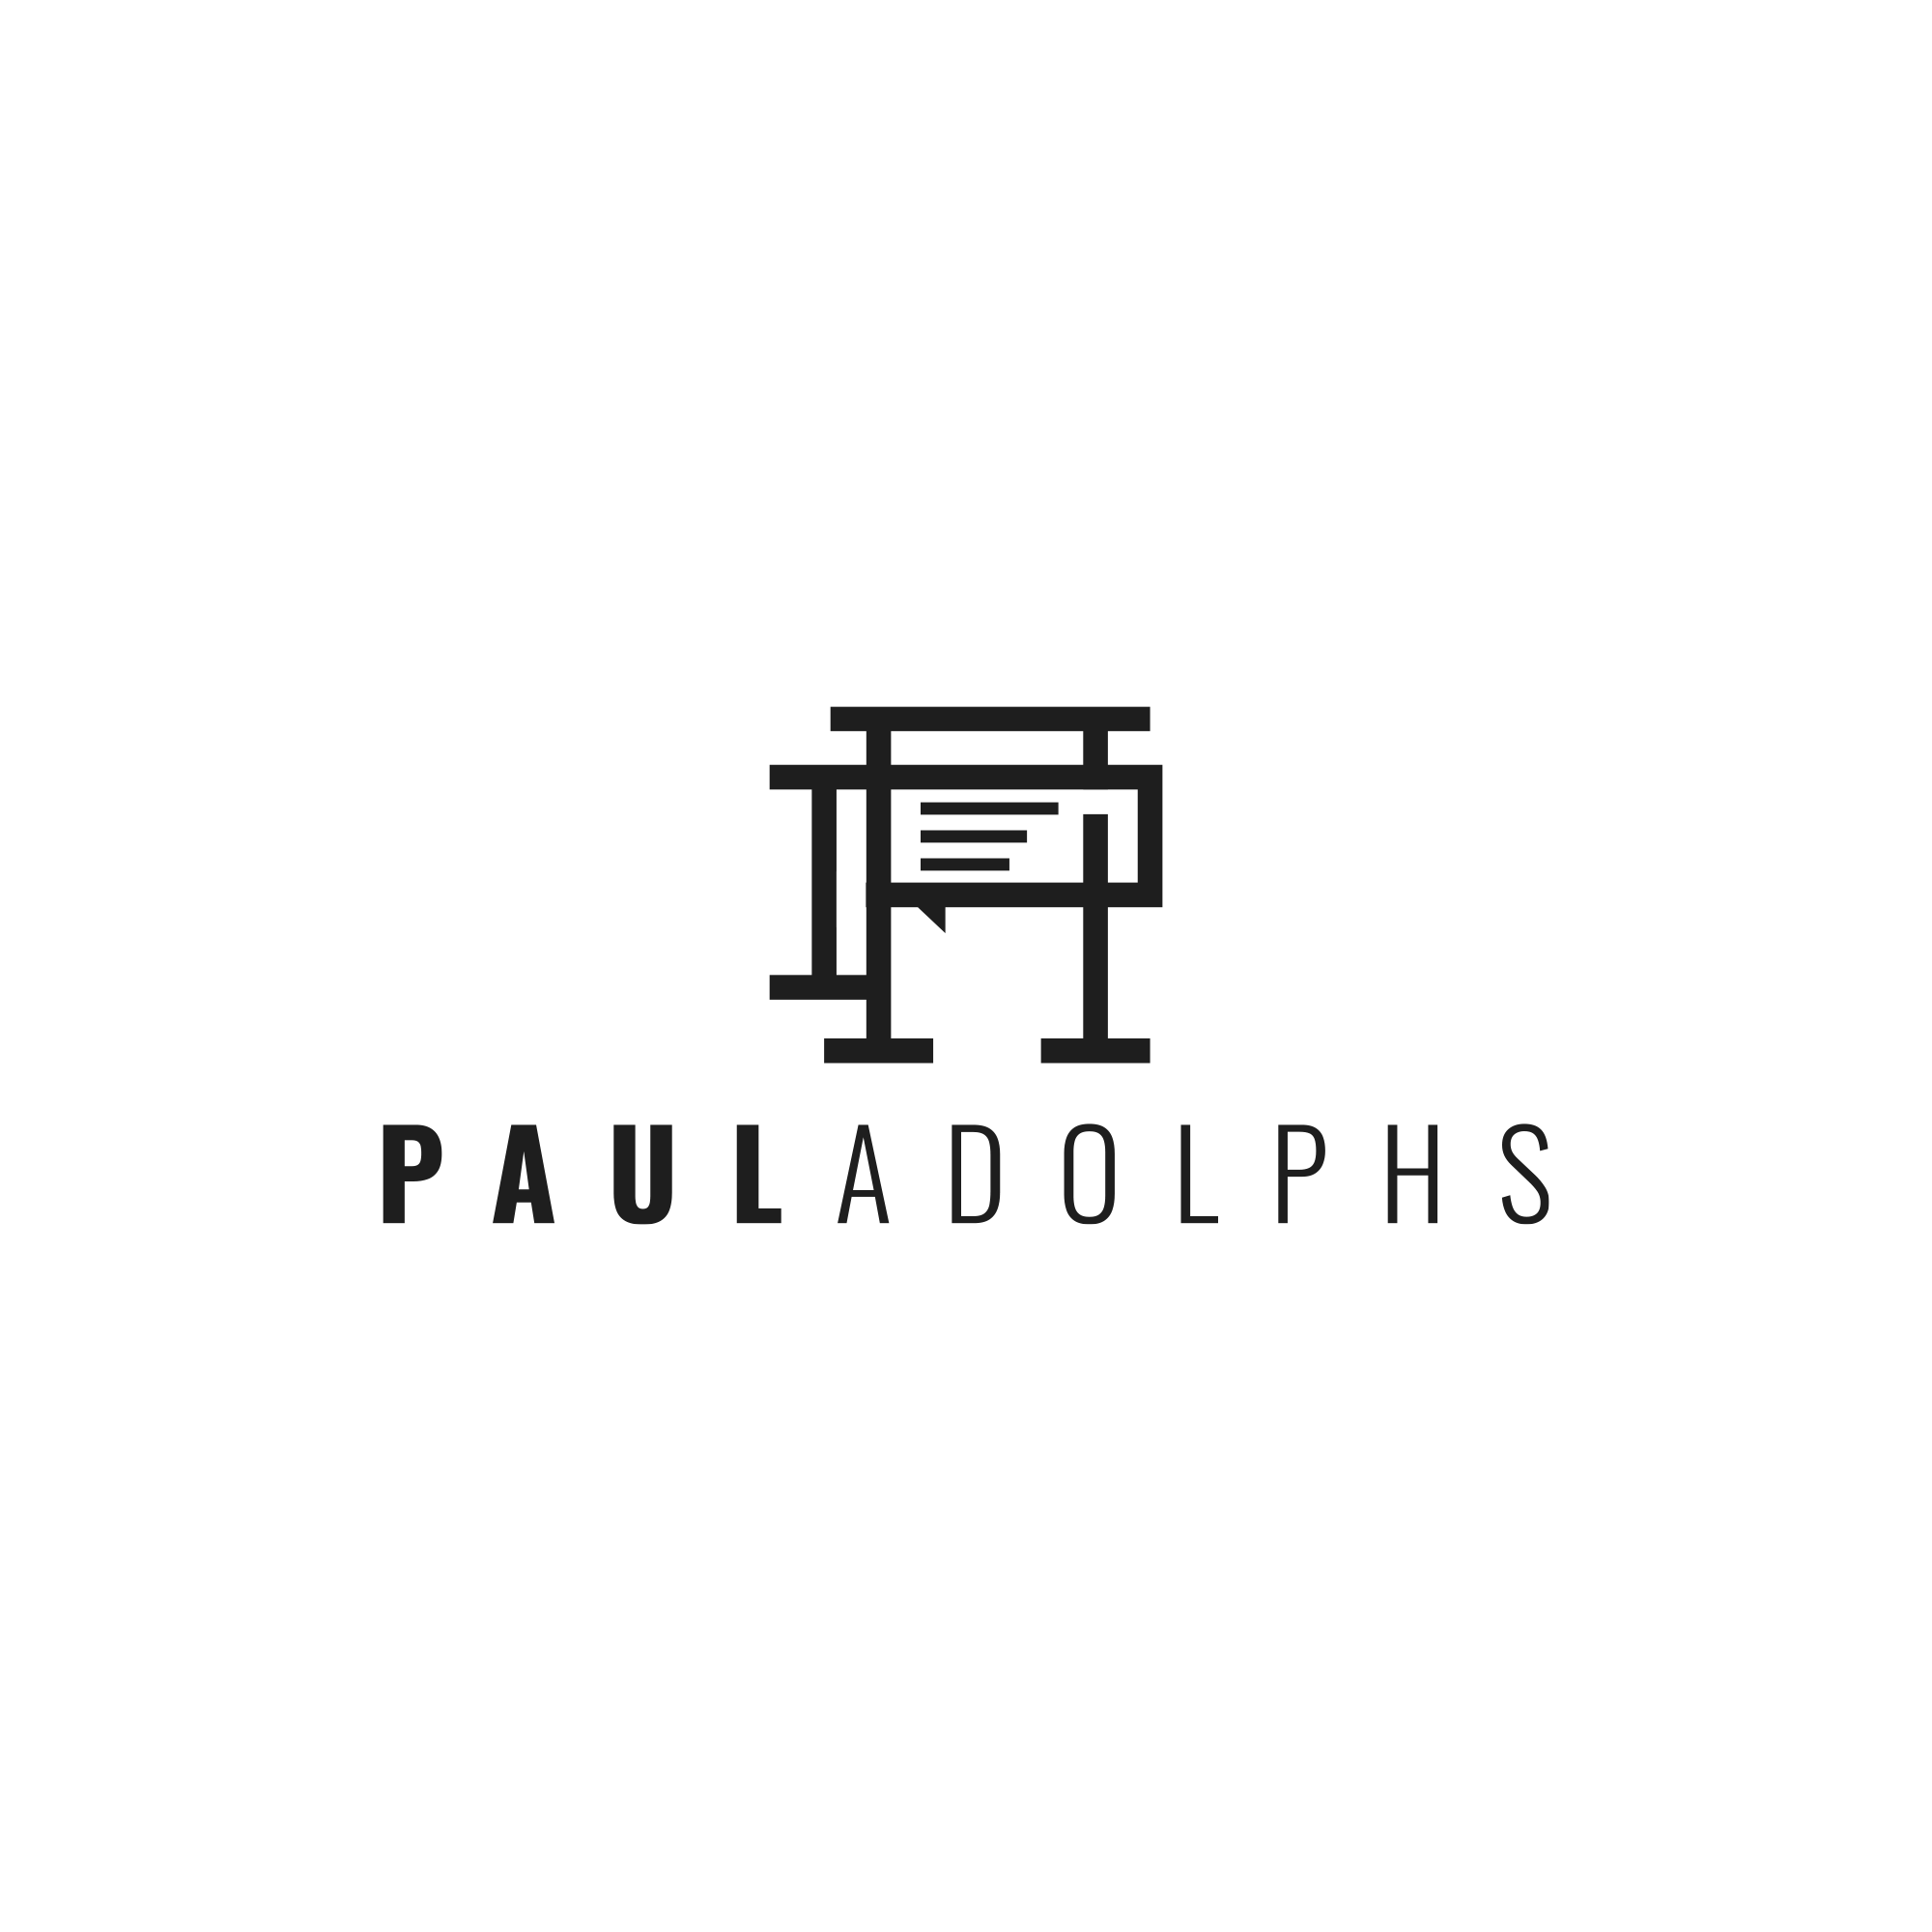 Verkaufspsychologe Paul Adolphs Logo